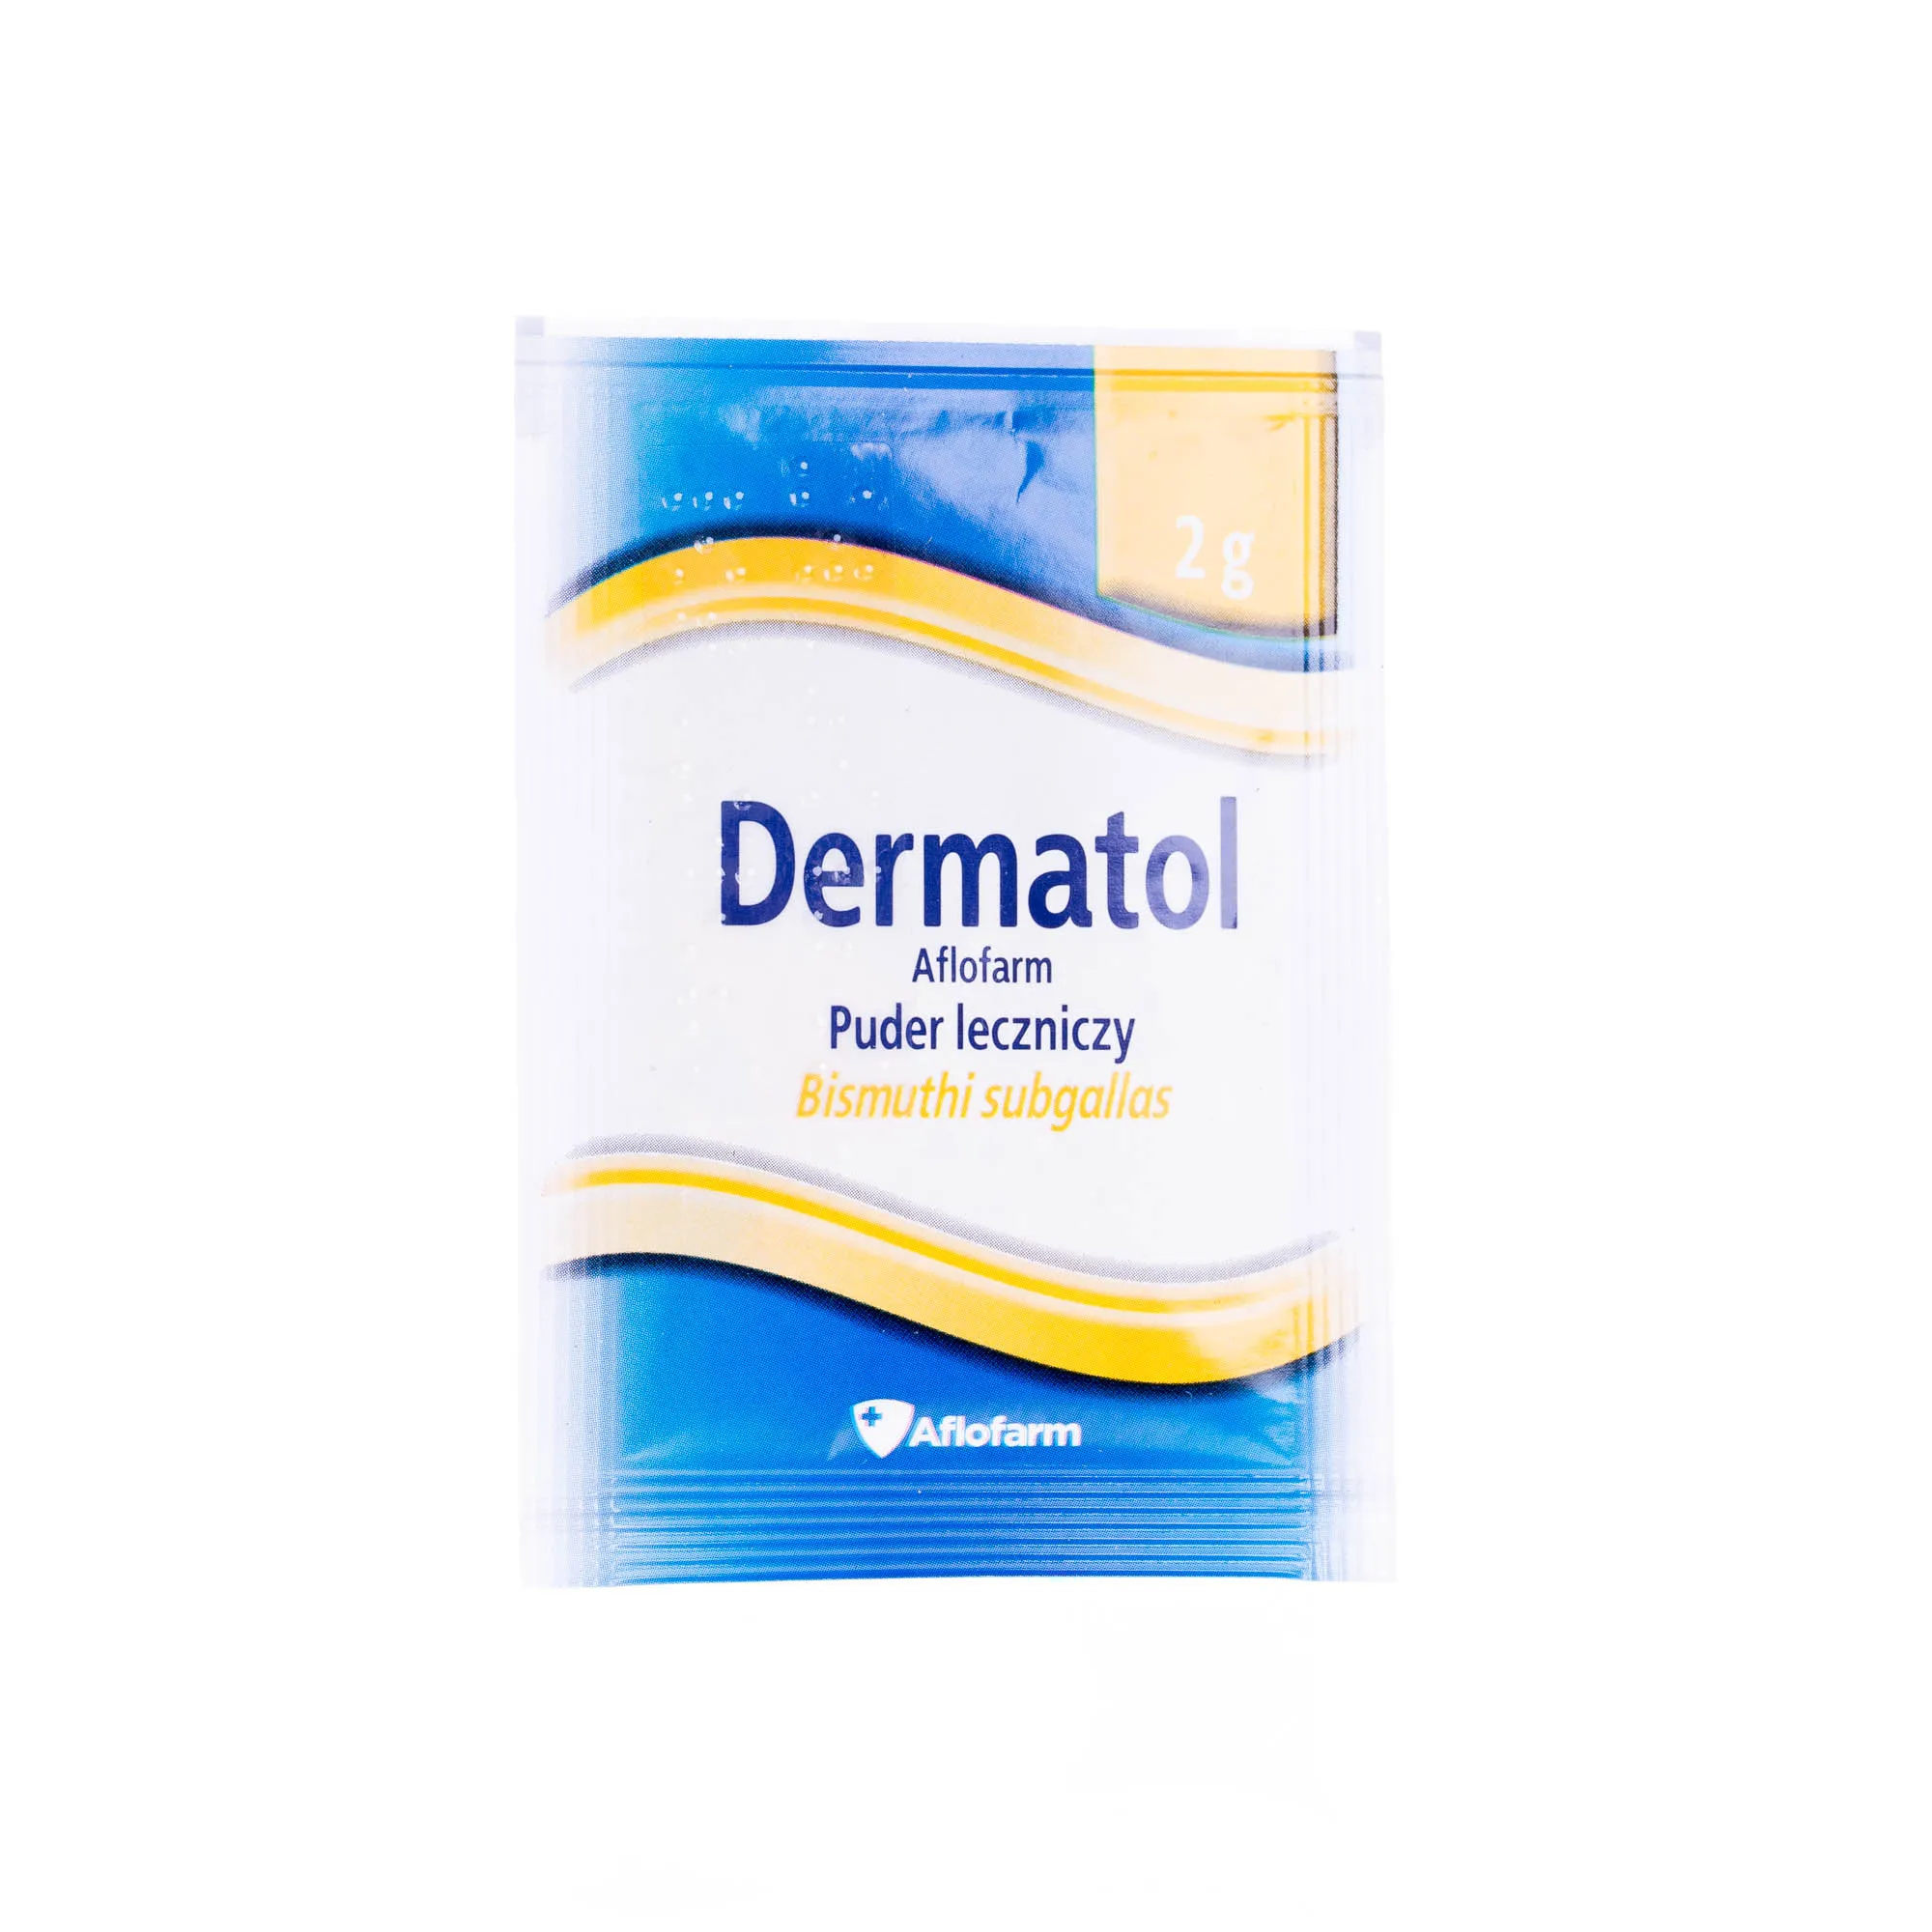 Dermatol - puder leczniczy, 2 g